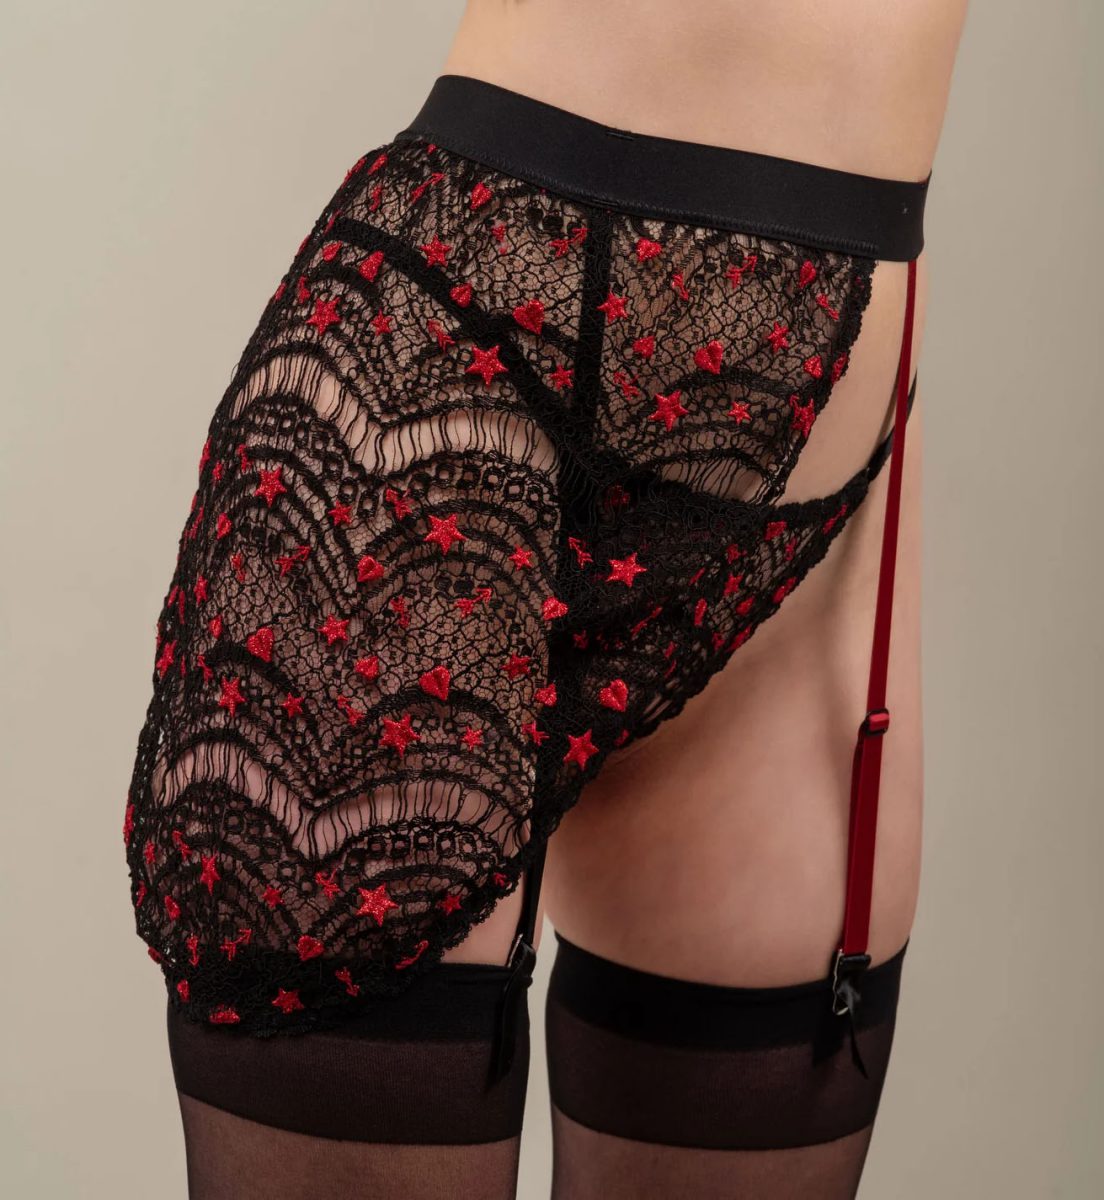 Odette Ancel Gypsy Rose asymmetric lace suspender belt